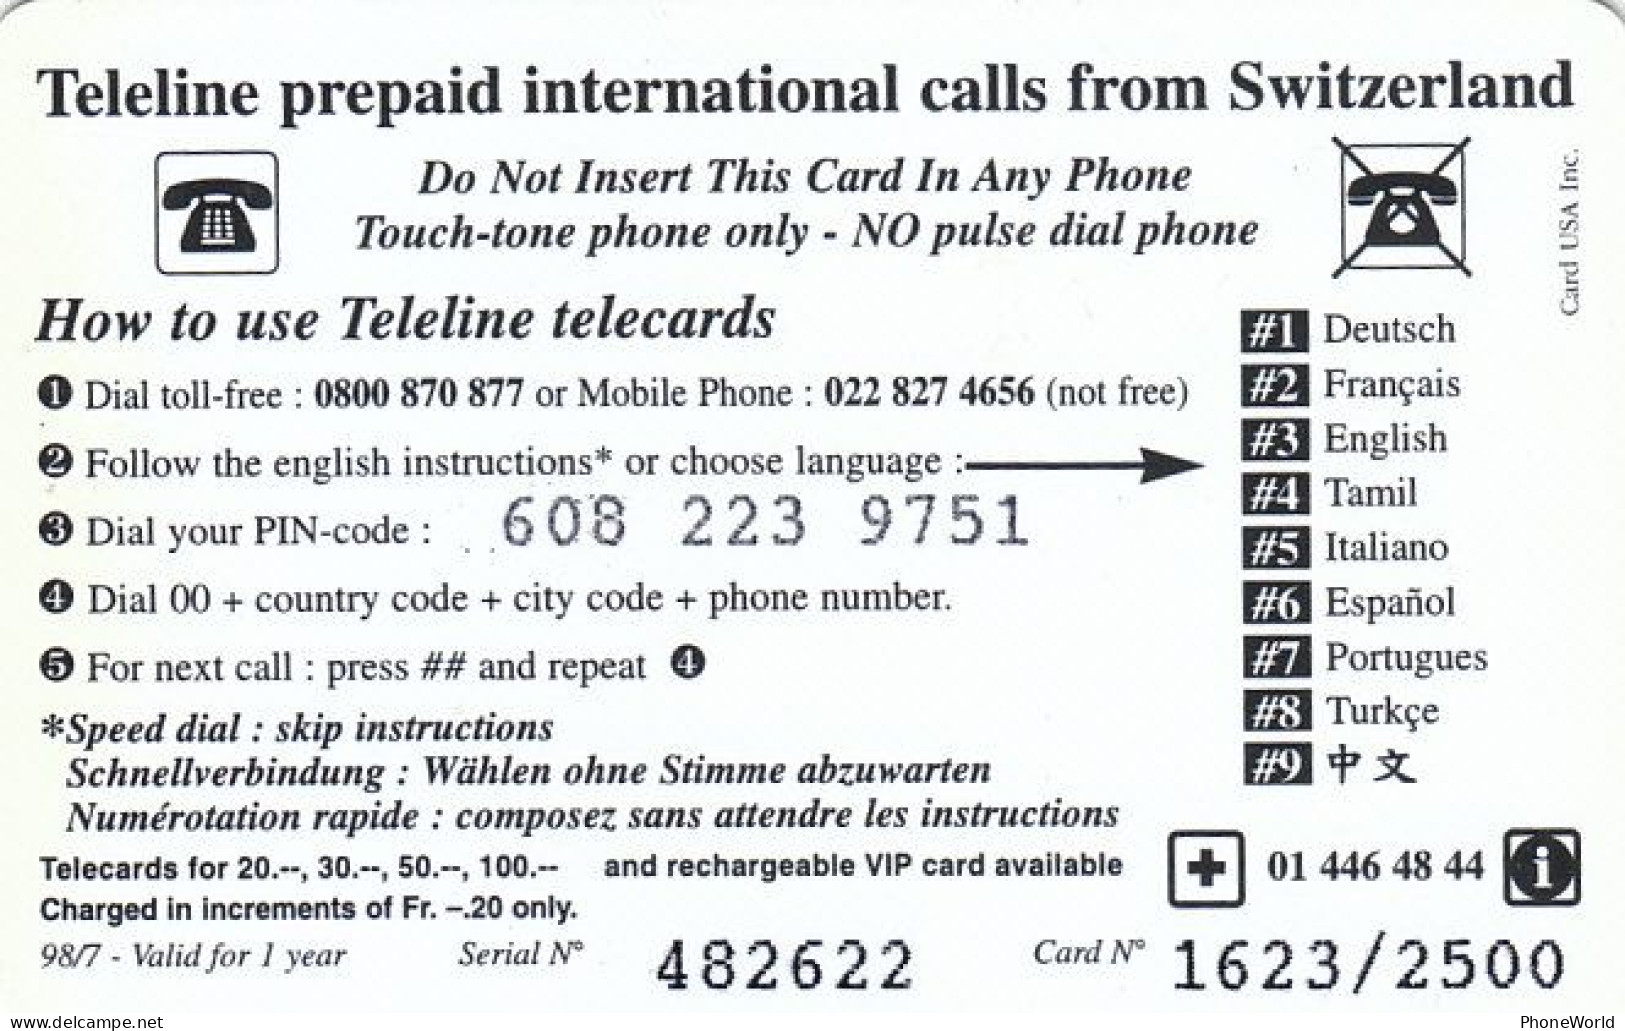 Swiss, Teleline  Van TC  Fr.20 '98, Dolphin, 1623/2500 - Switzerland